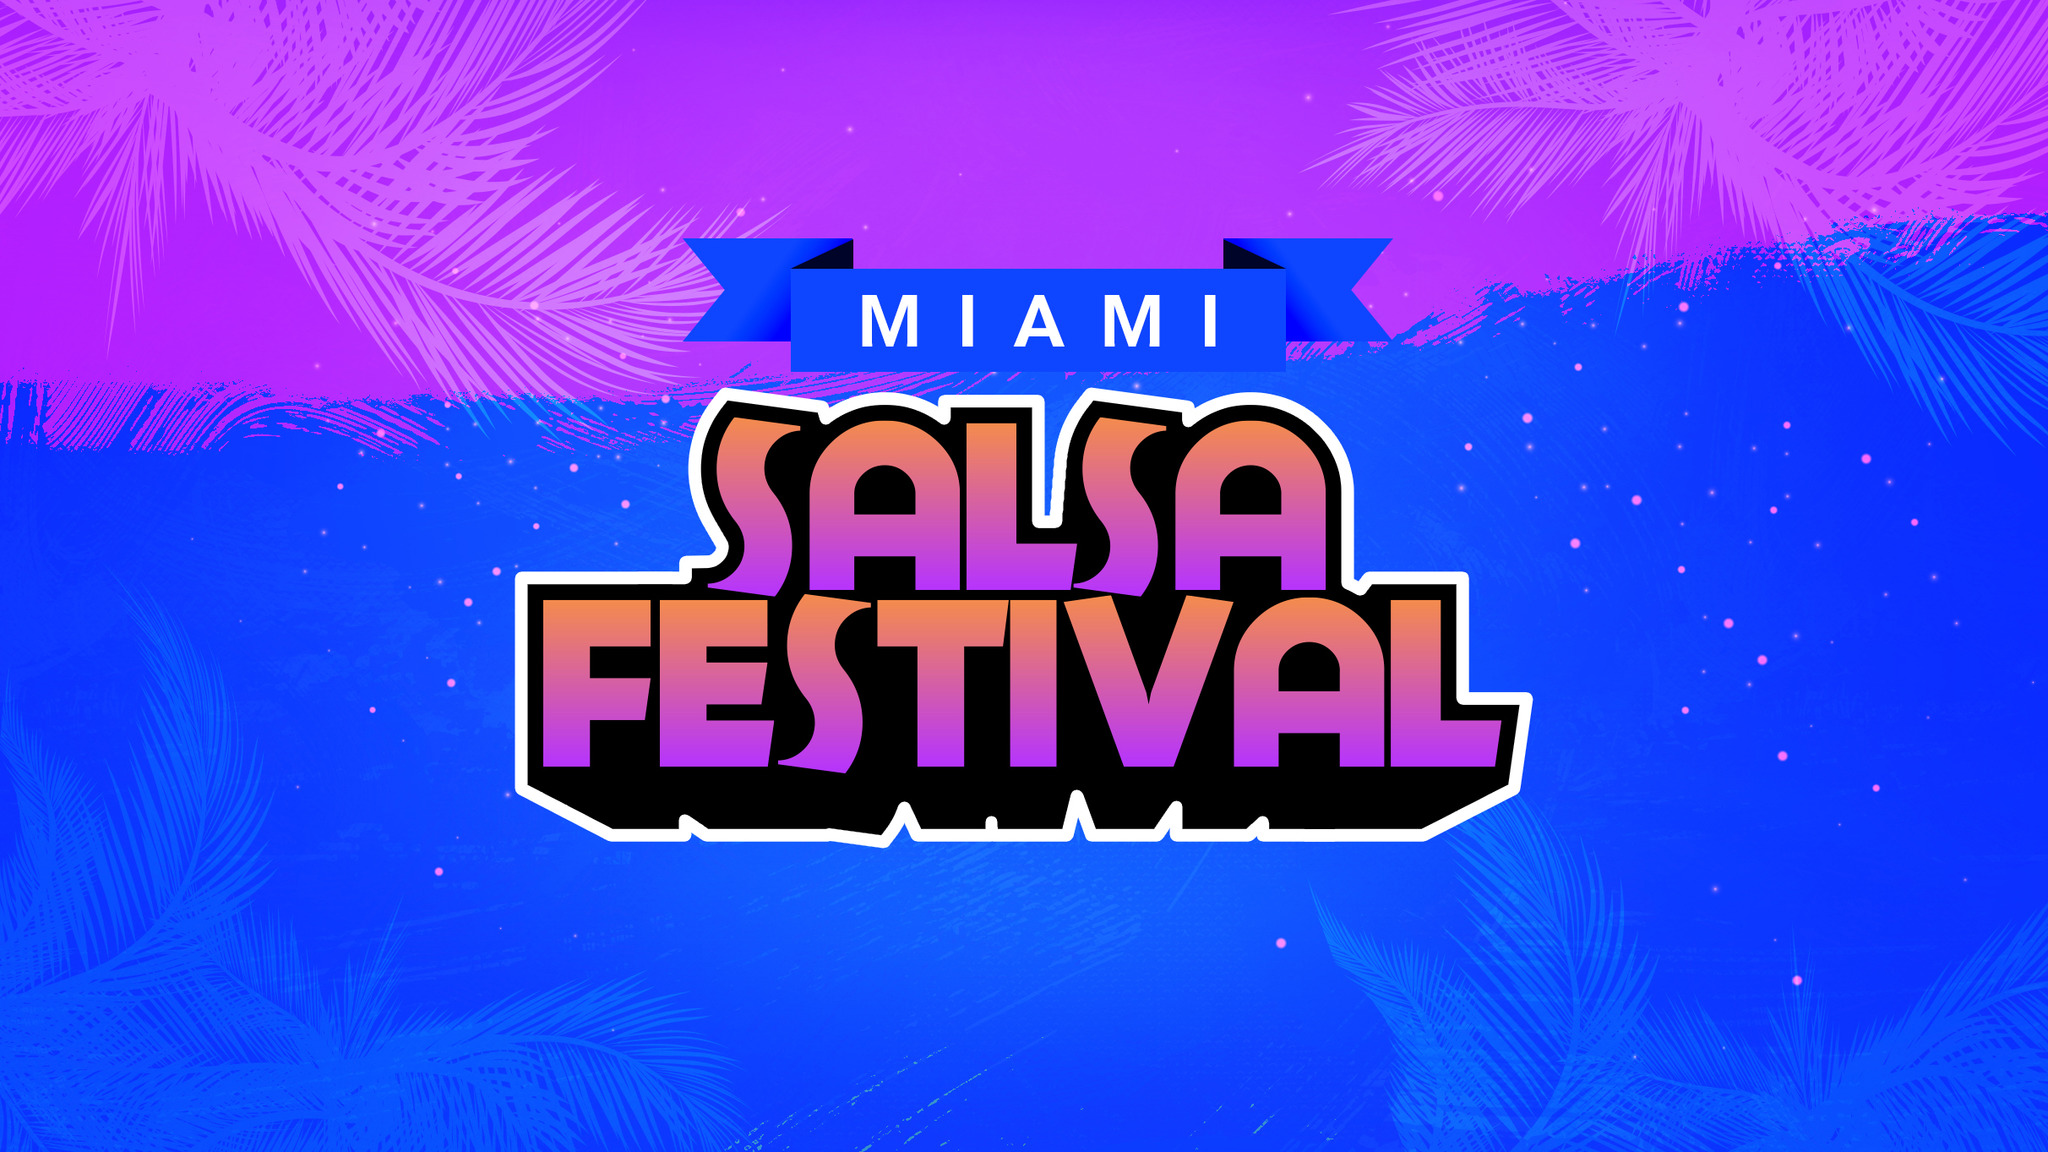 Miami Salsa Festival Tickets, 20222023 Concert Tour Dates Ticketmaster